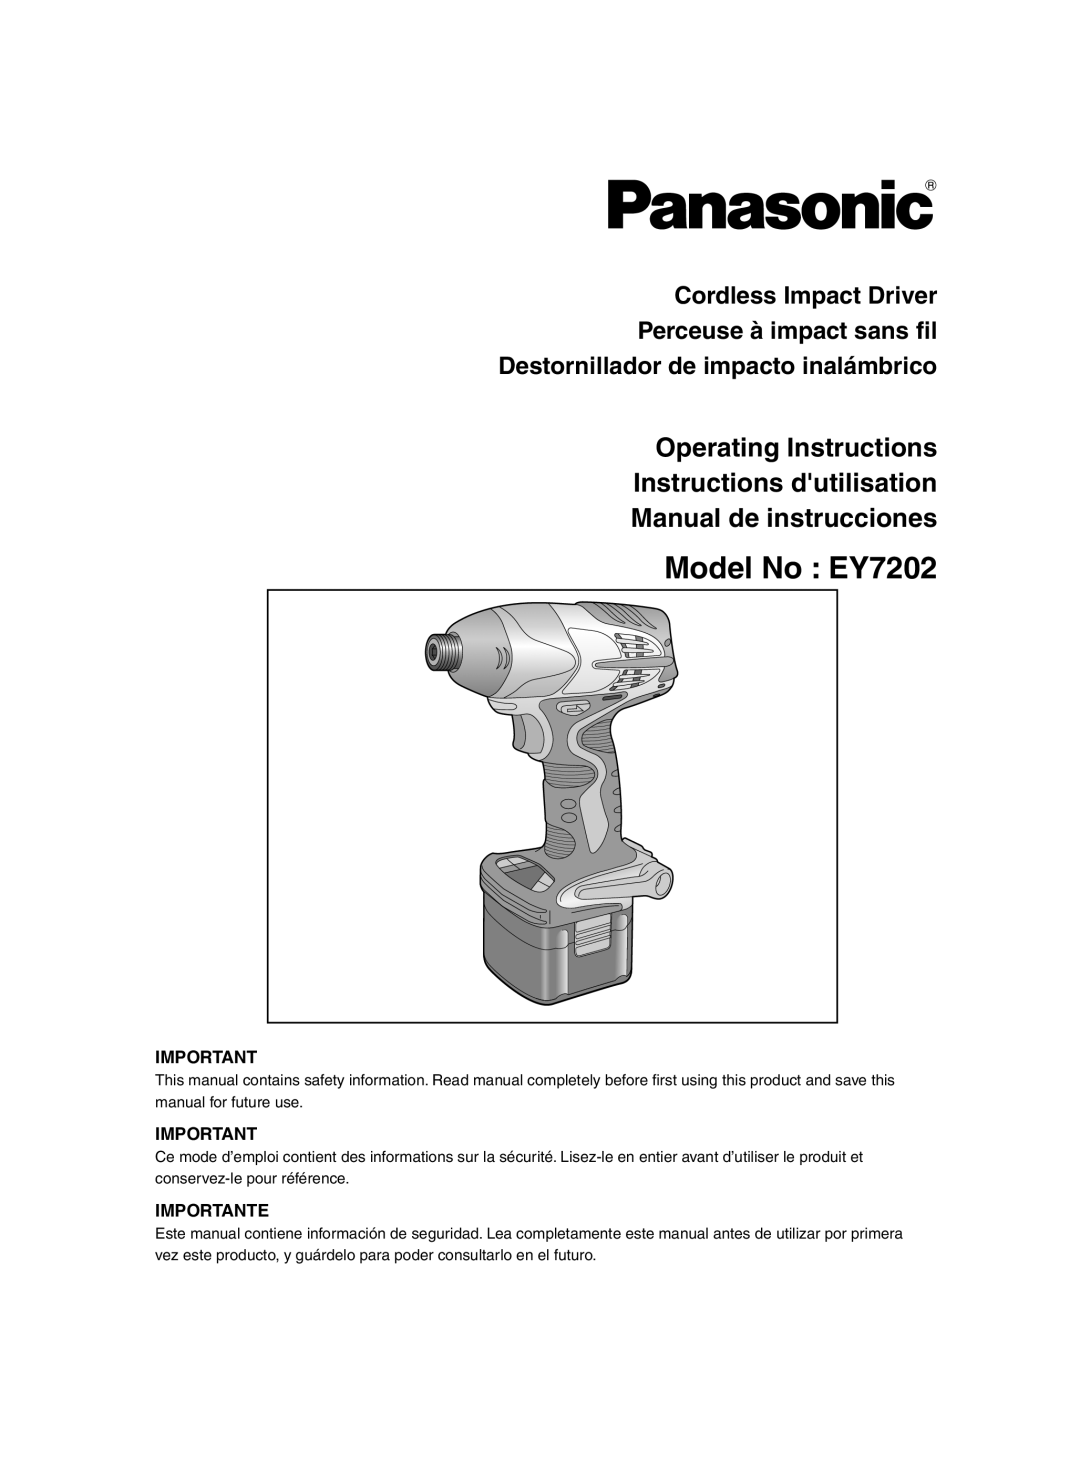 Panasonic operating instructions Model No EY7202, Operating Instructions Instructions dutilisation 